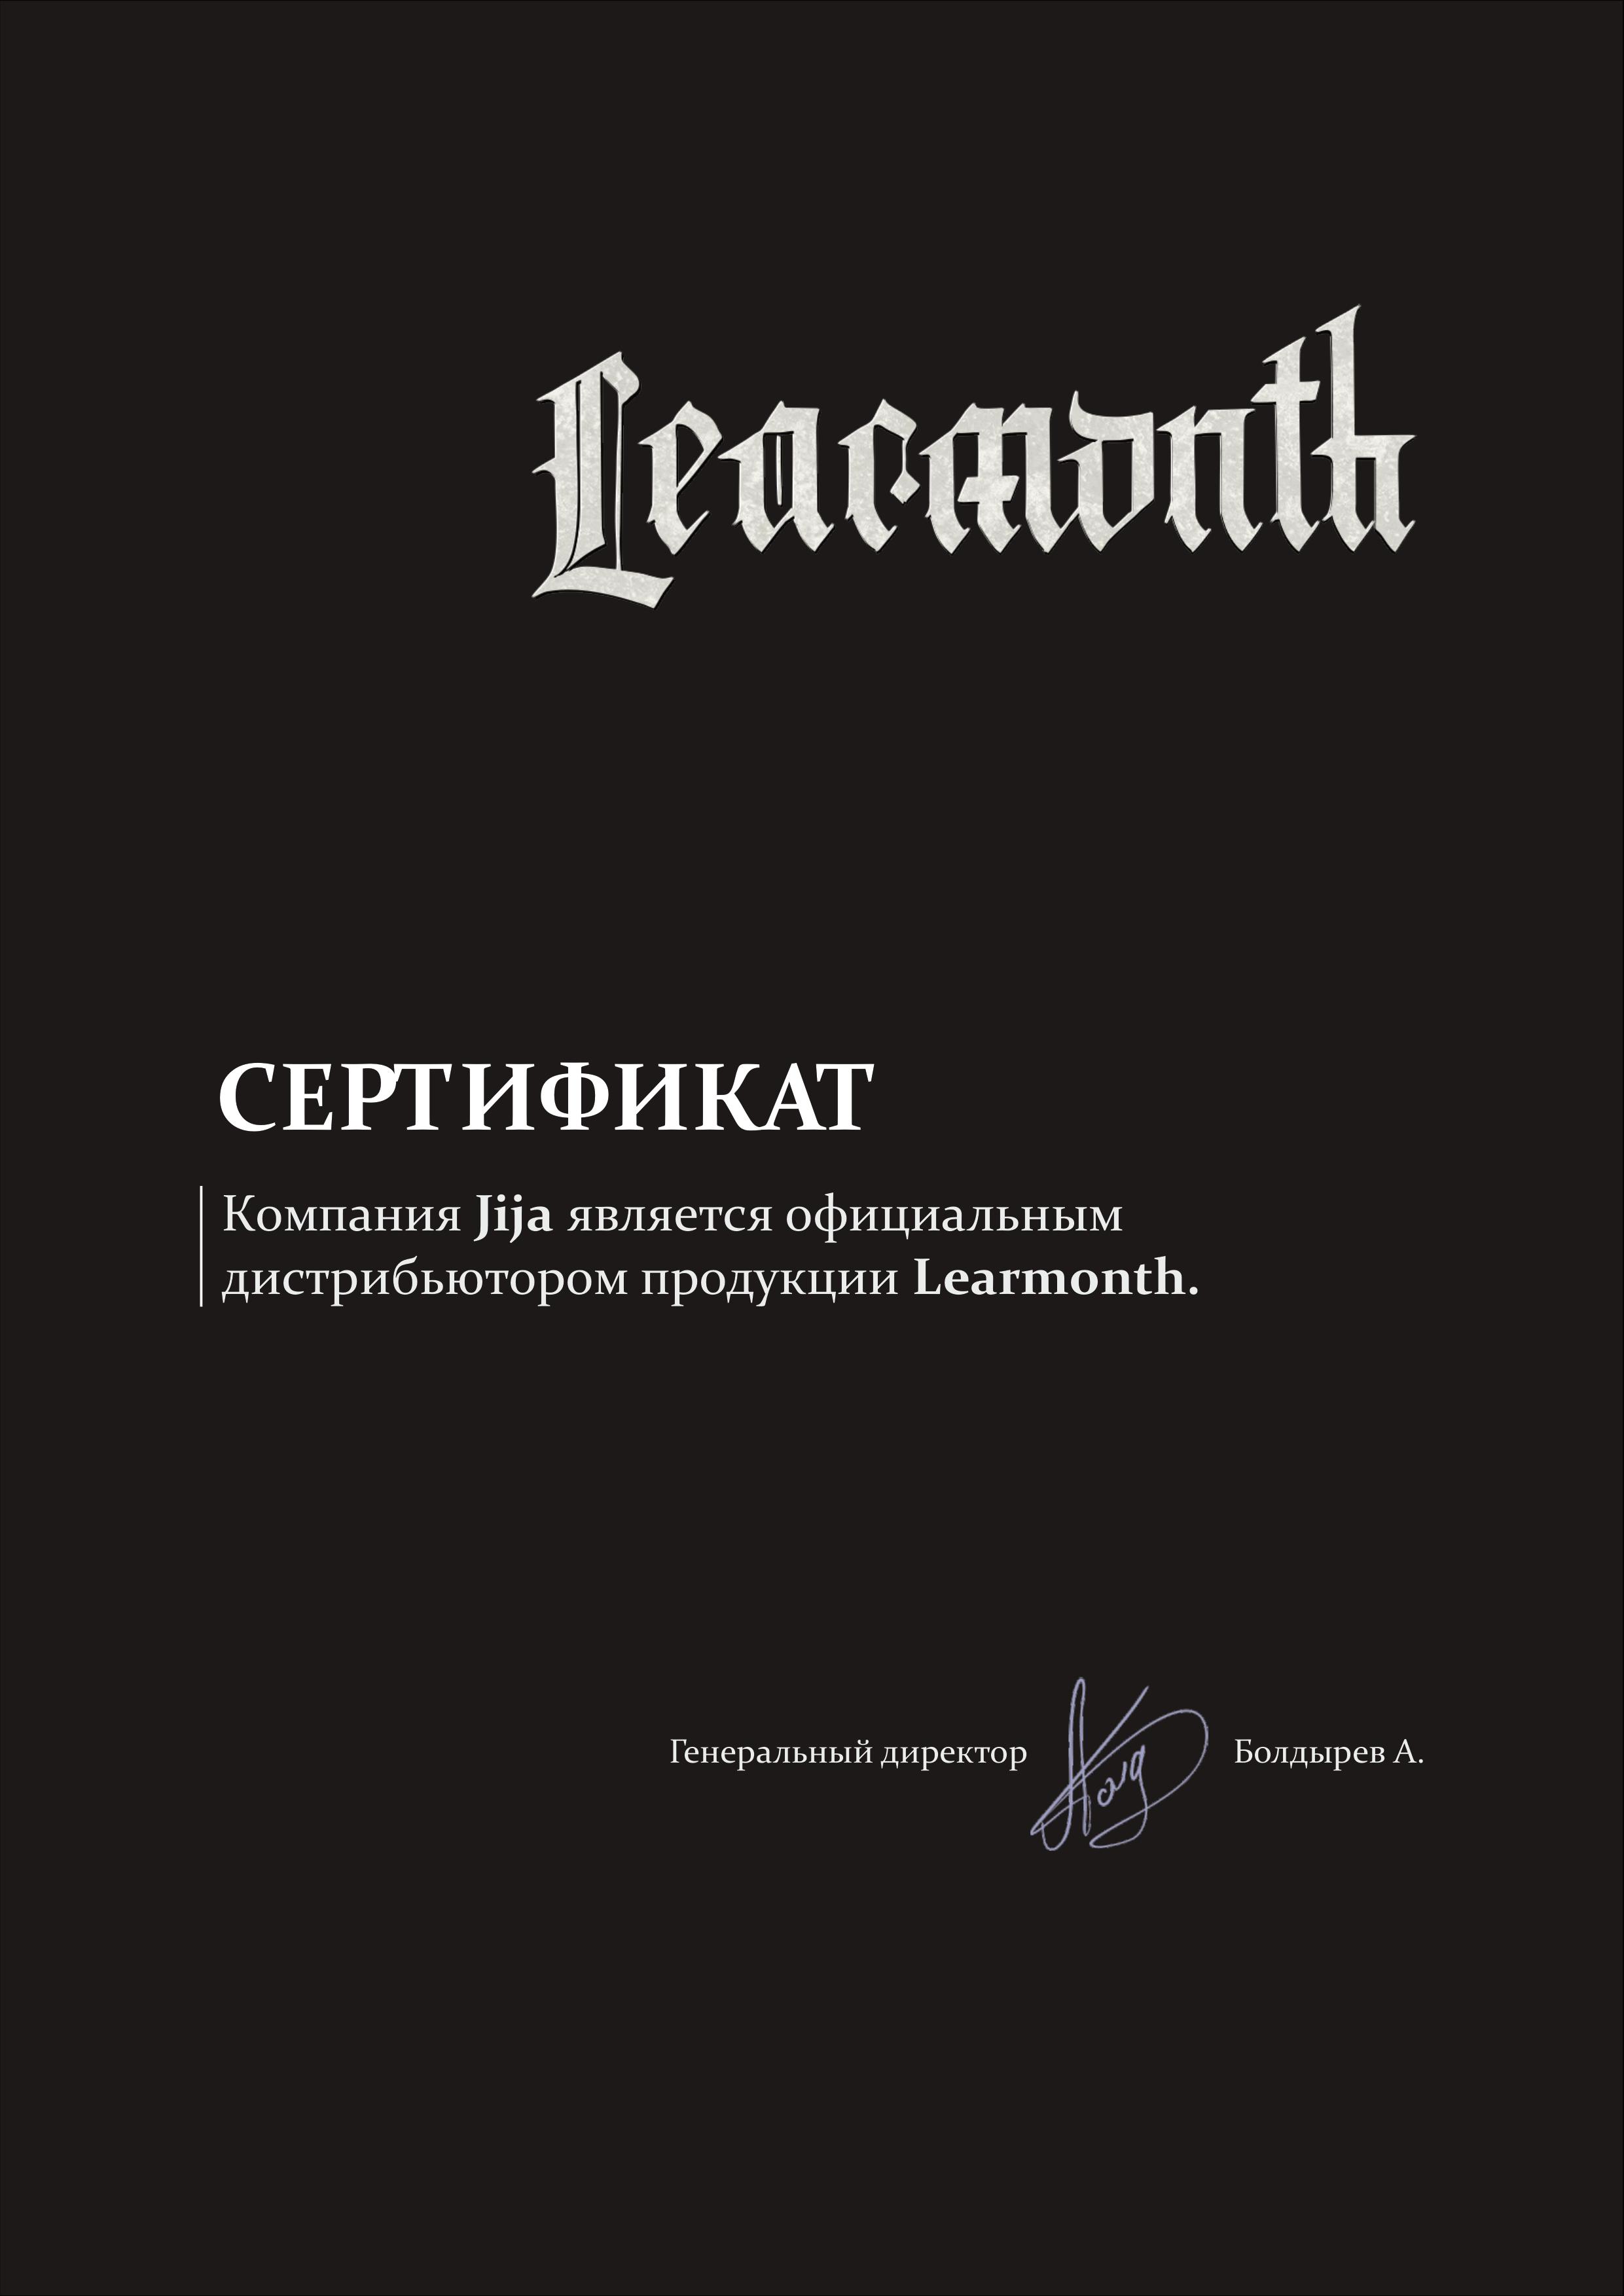 Learmonth